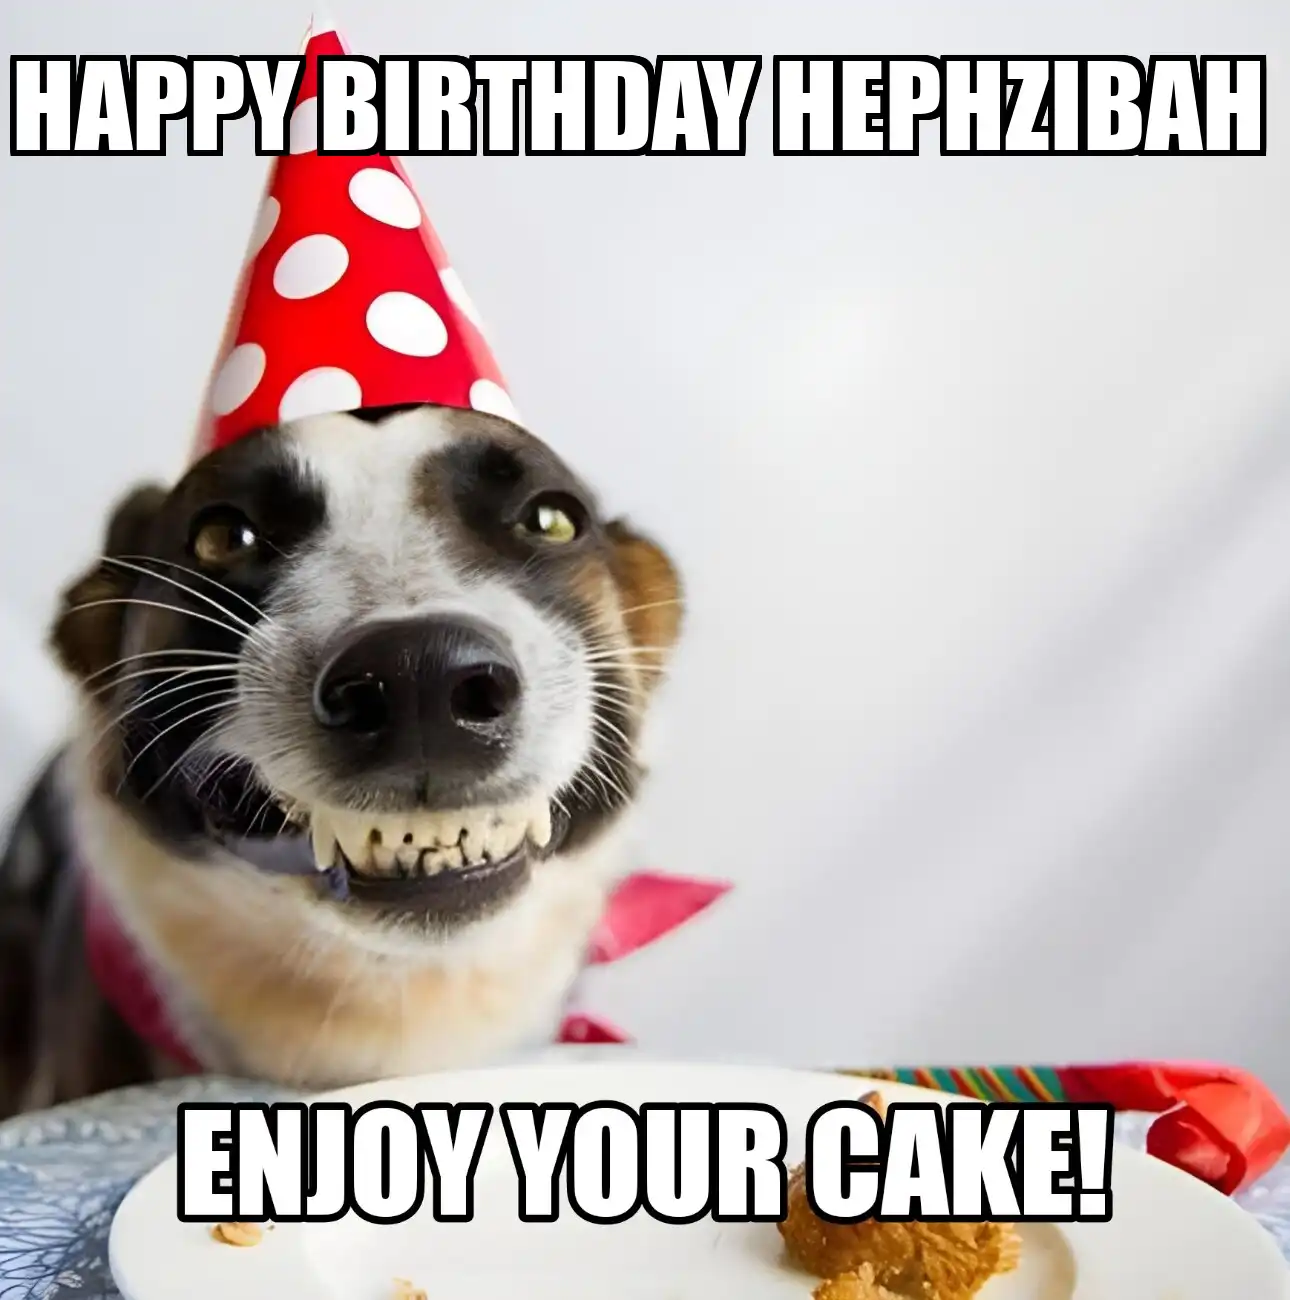 Happy Birthday Hephzibah Enjoy Your Cake Dog Meme